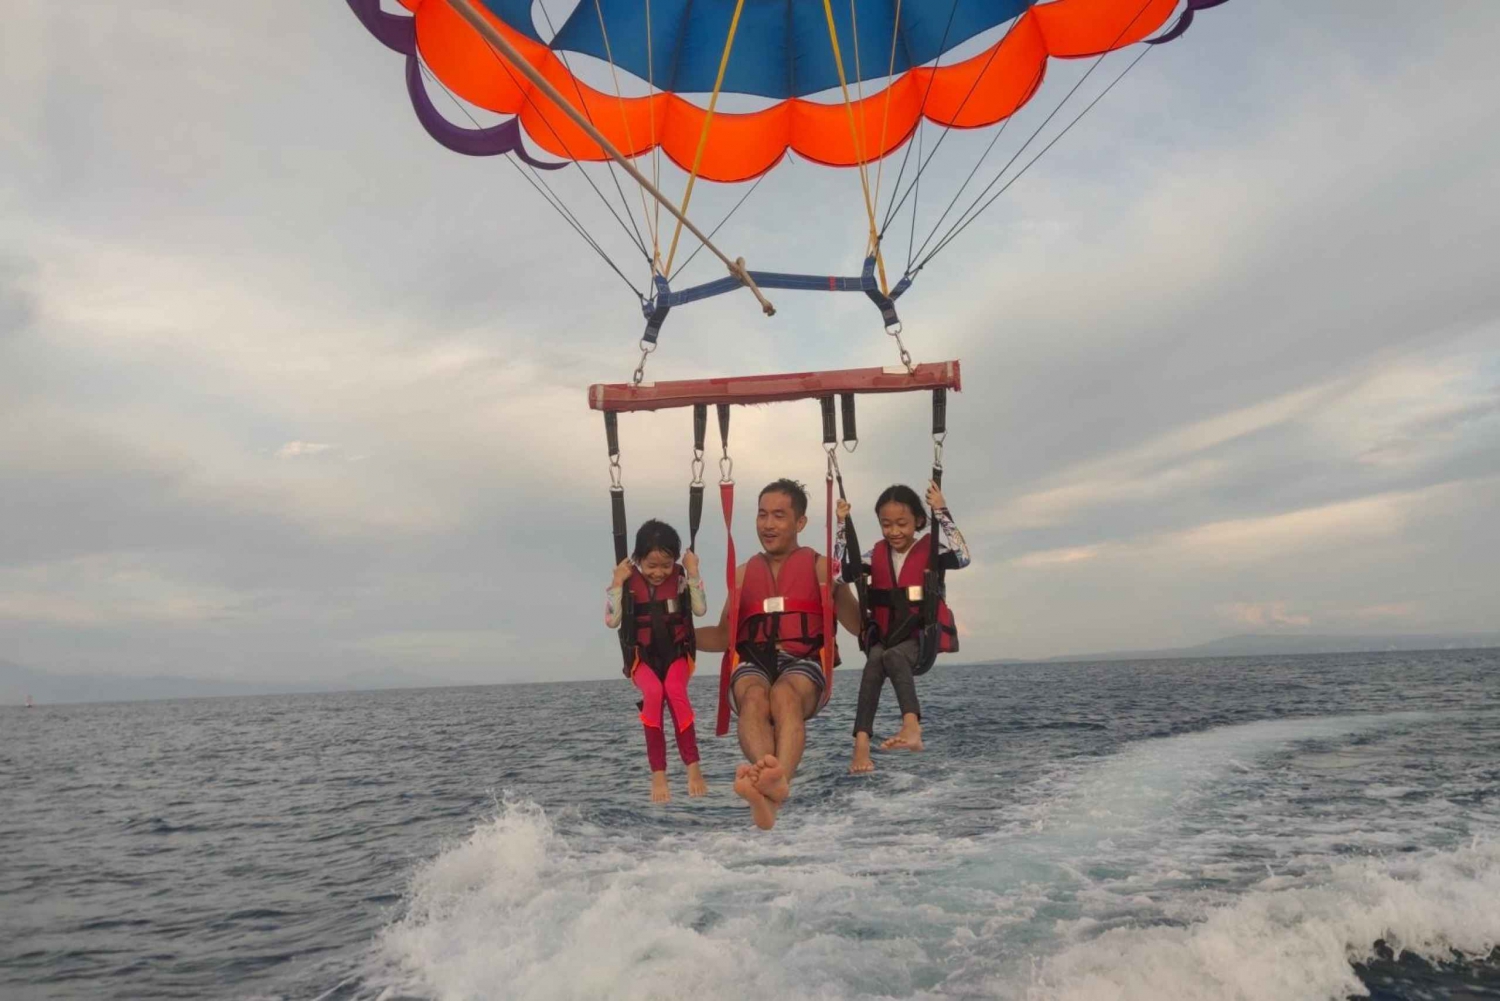 Bali: Parasailing Adventure Experience at Nusa Dua Beach